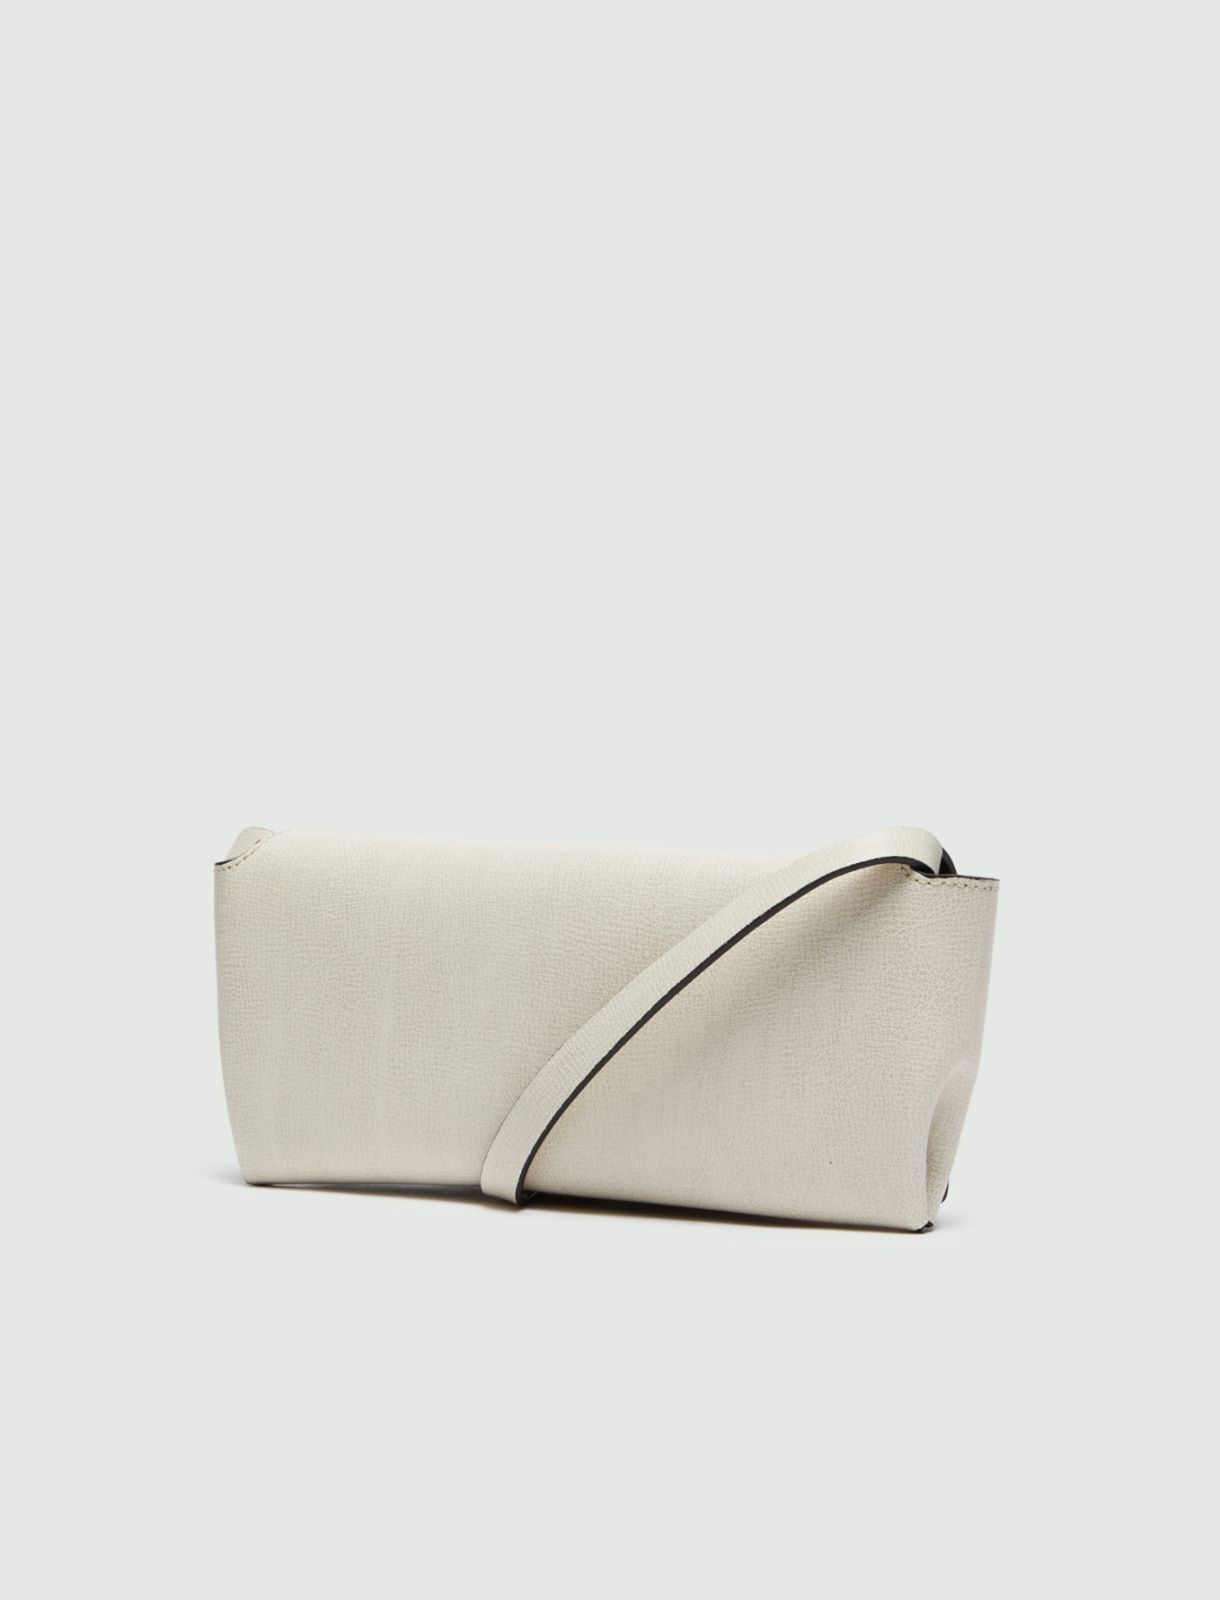 Leather wallet/bag  - White - Marella - 2